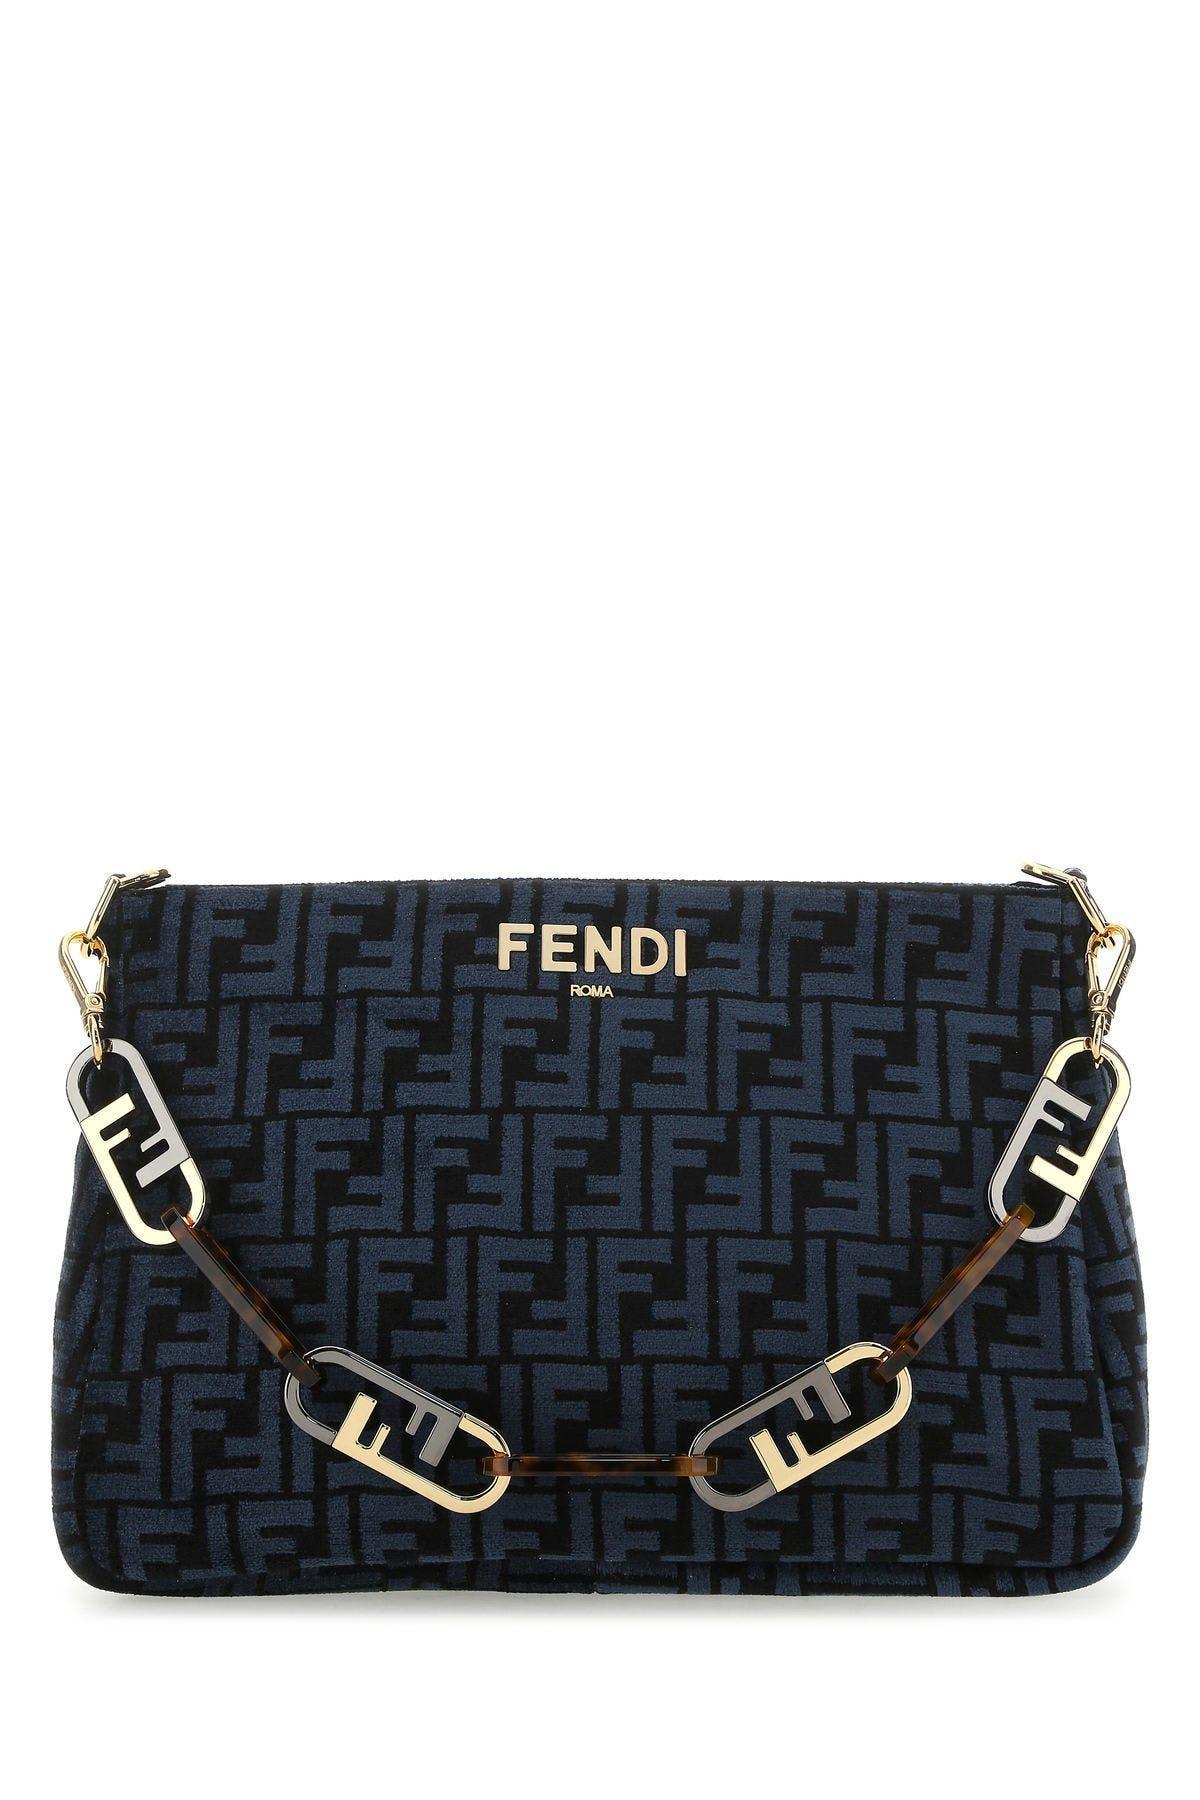 Fendi Embroidered Fabric O Lock Zip Handbag in Black | Lyst